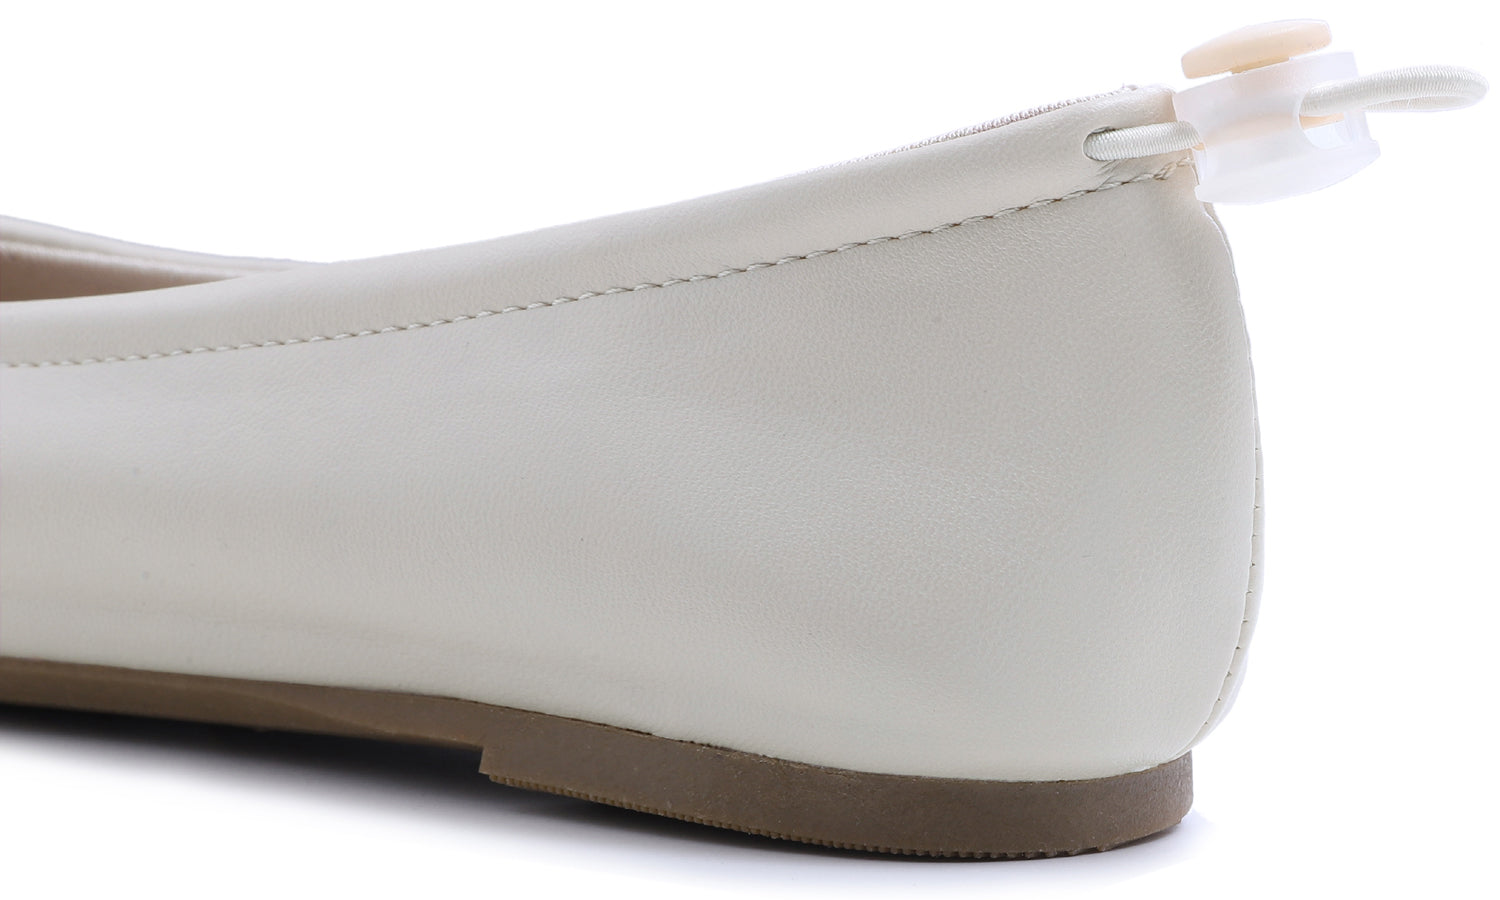 Feversole Women's Soft Cushion Comfort Round Toe Elastic Adjustable Ballet Flats Flexible Walking Shoes Light Beige Napa